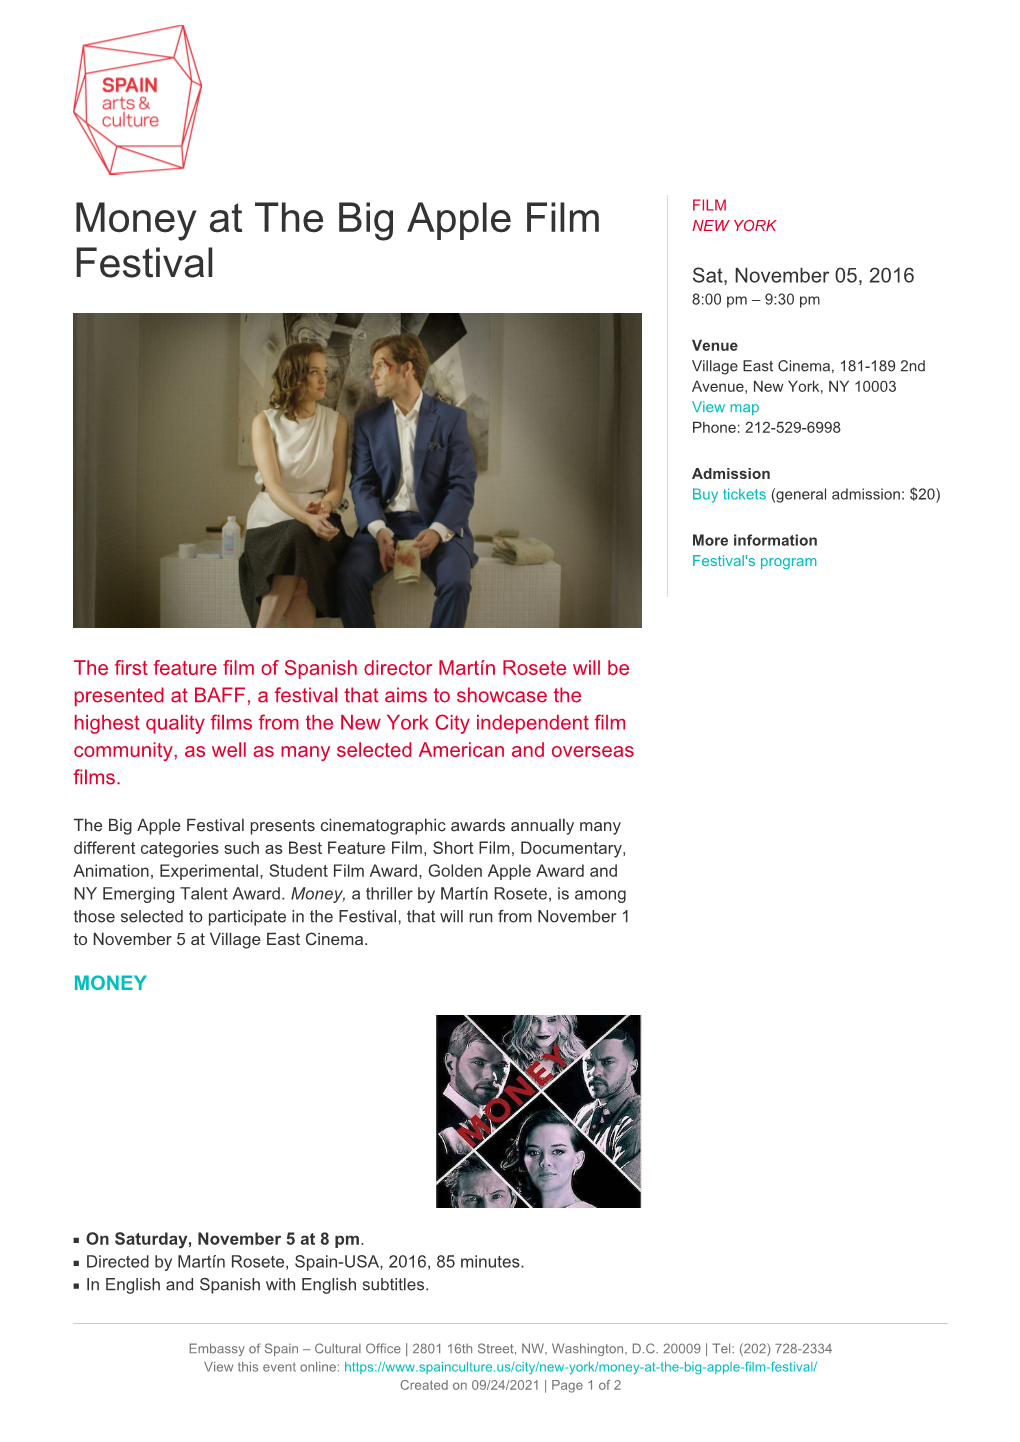 Money at the Big Apple Film Festival